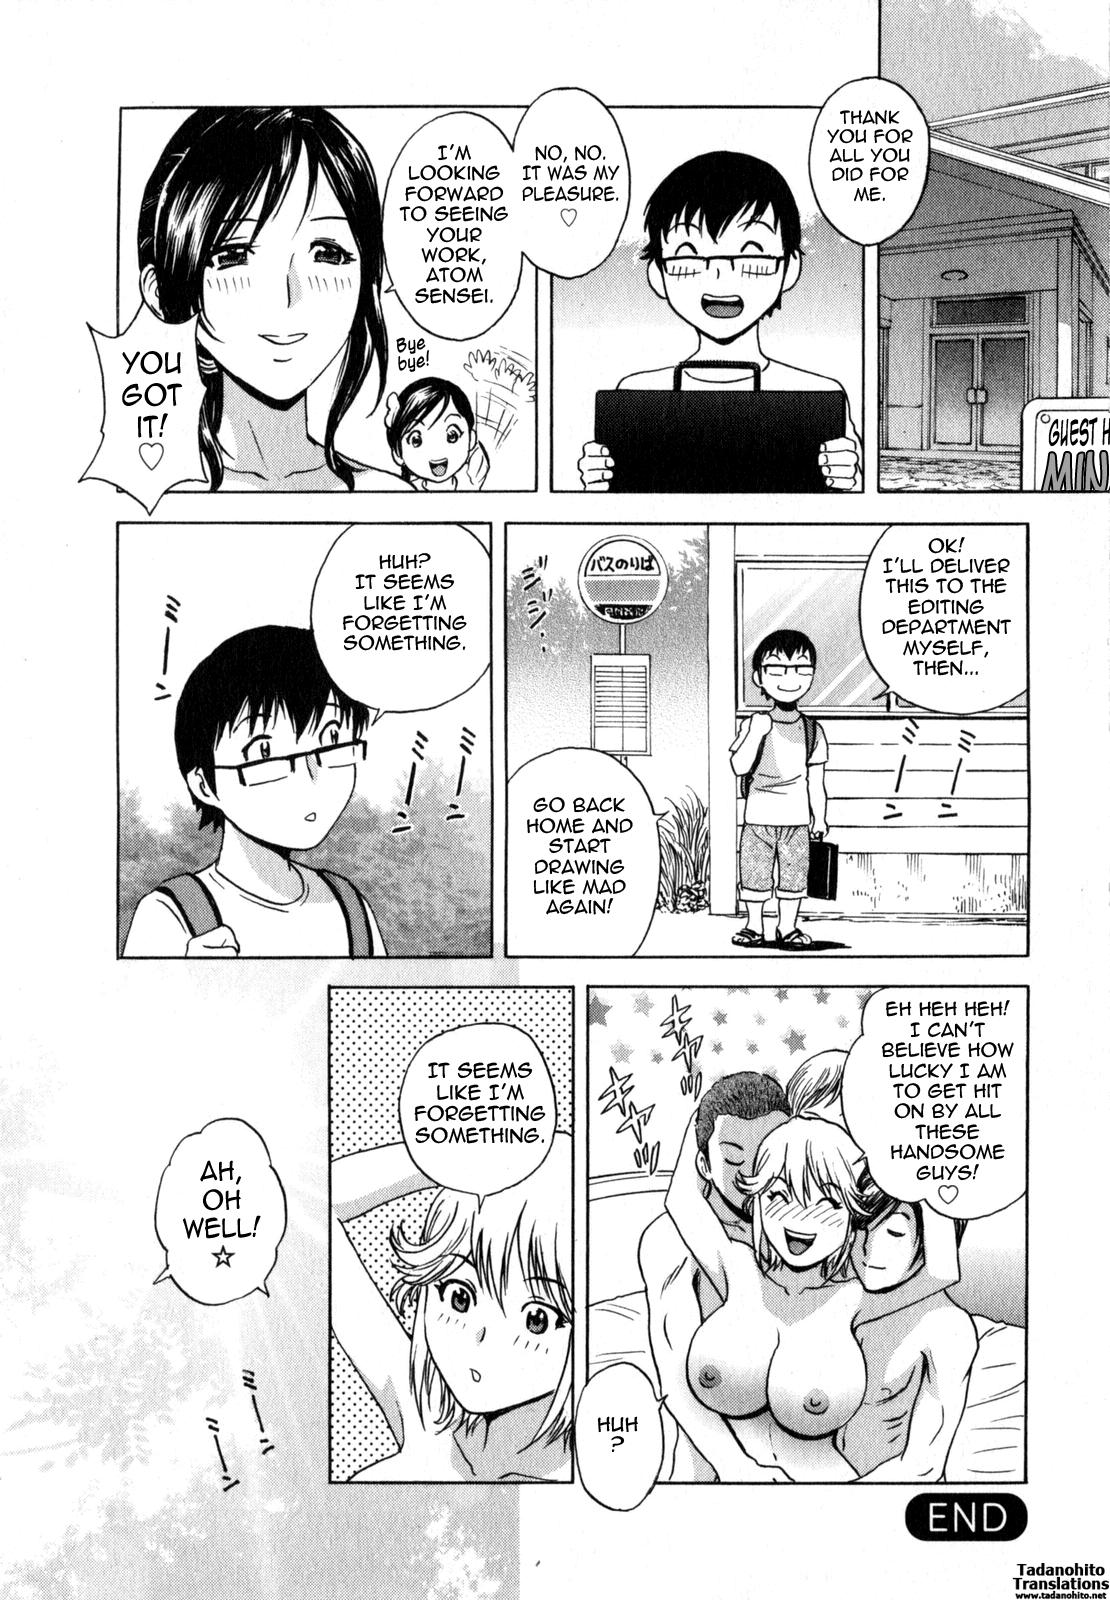 [Hidemaru] Life with Married Women Just Like a Manga 2 - Ch. 1-8 [English] {Tadanohito} 143